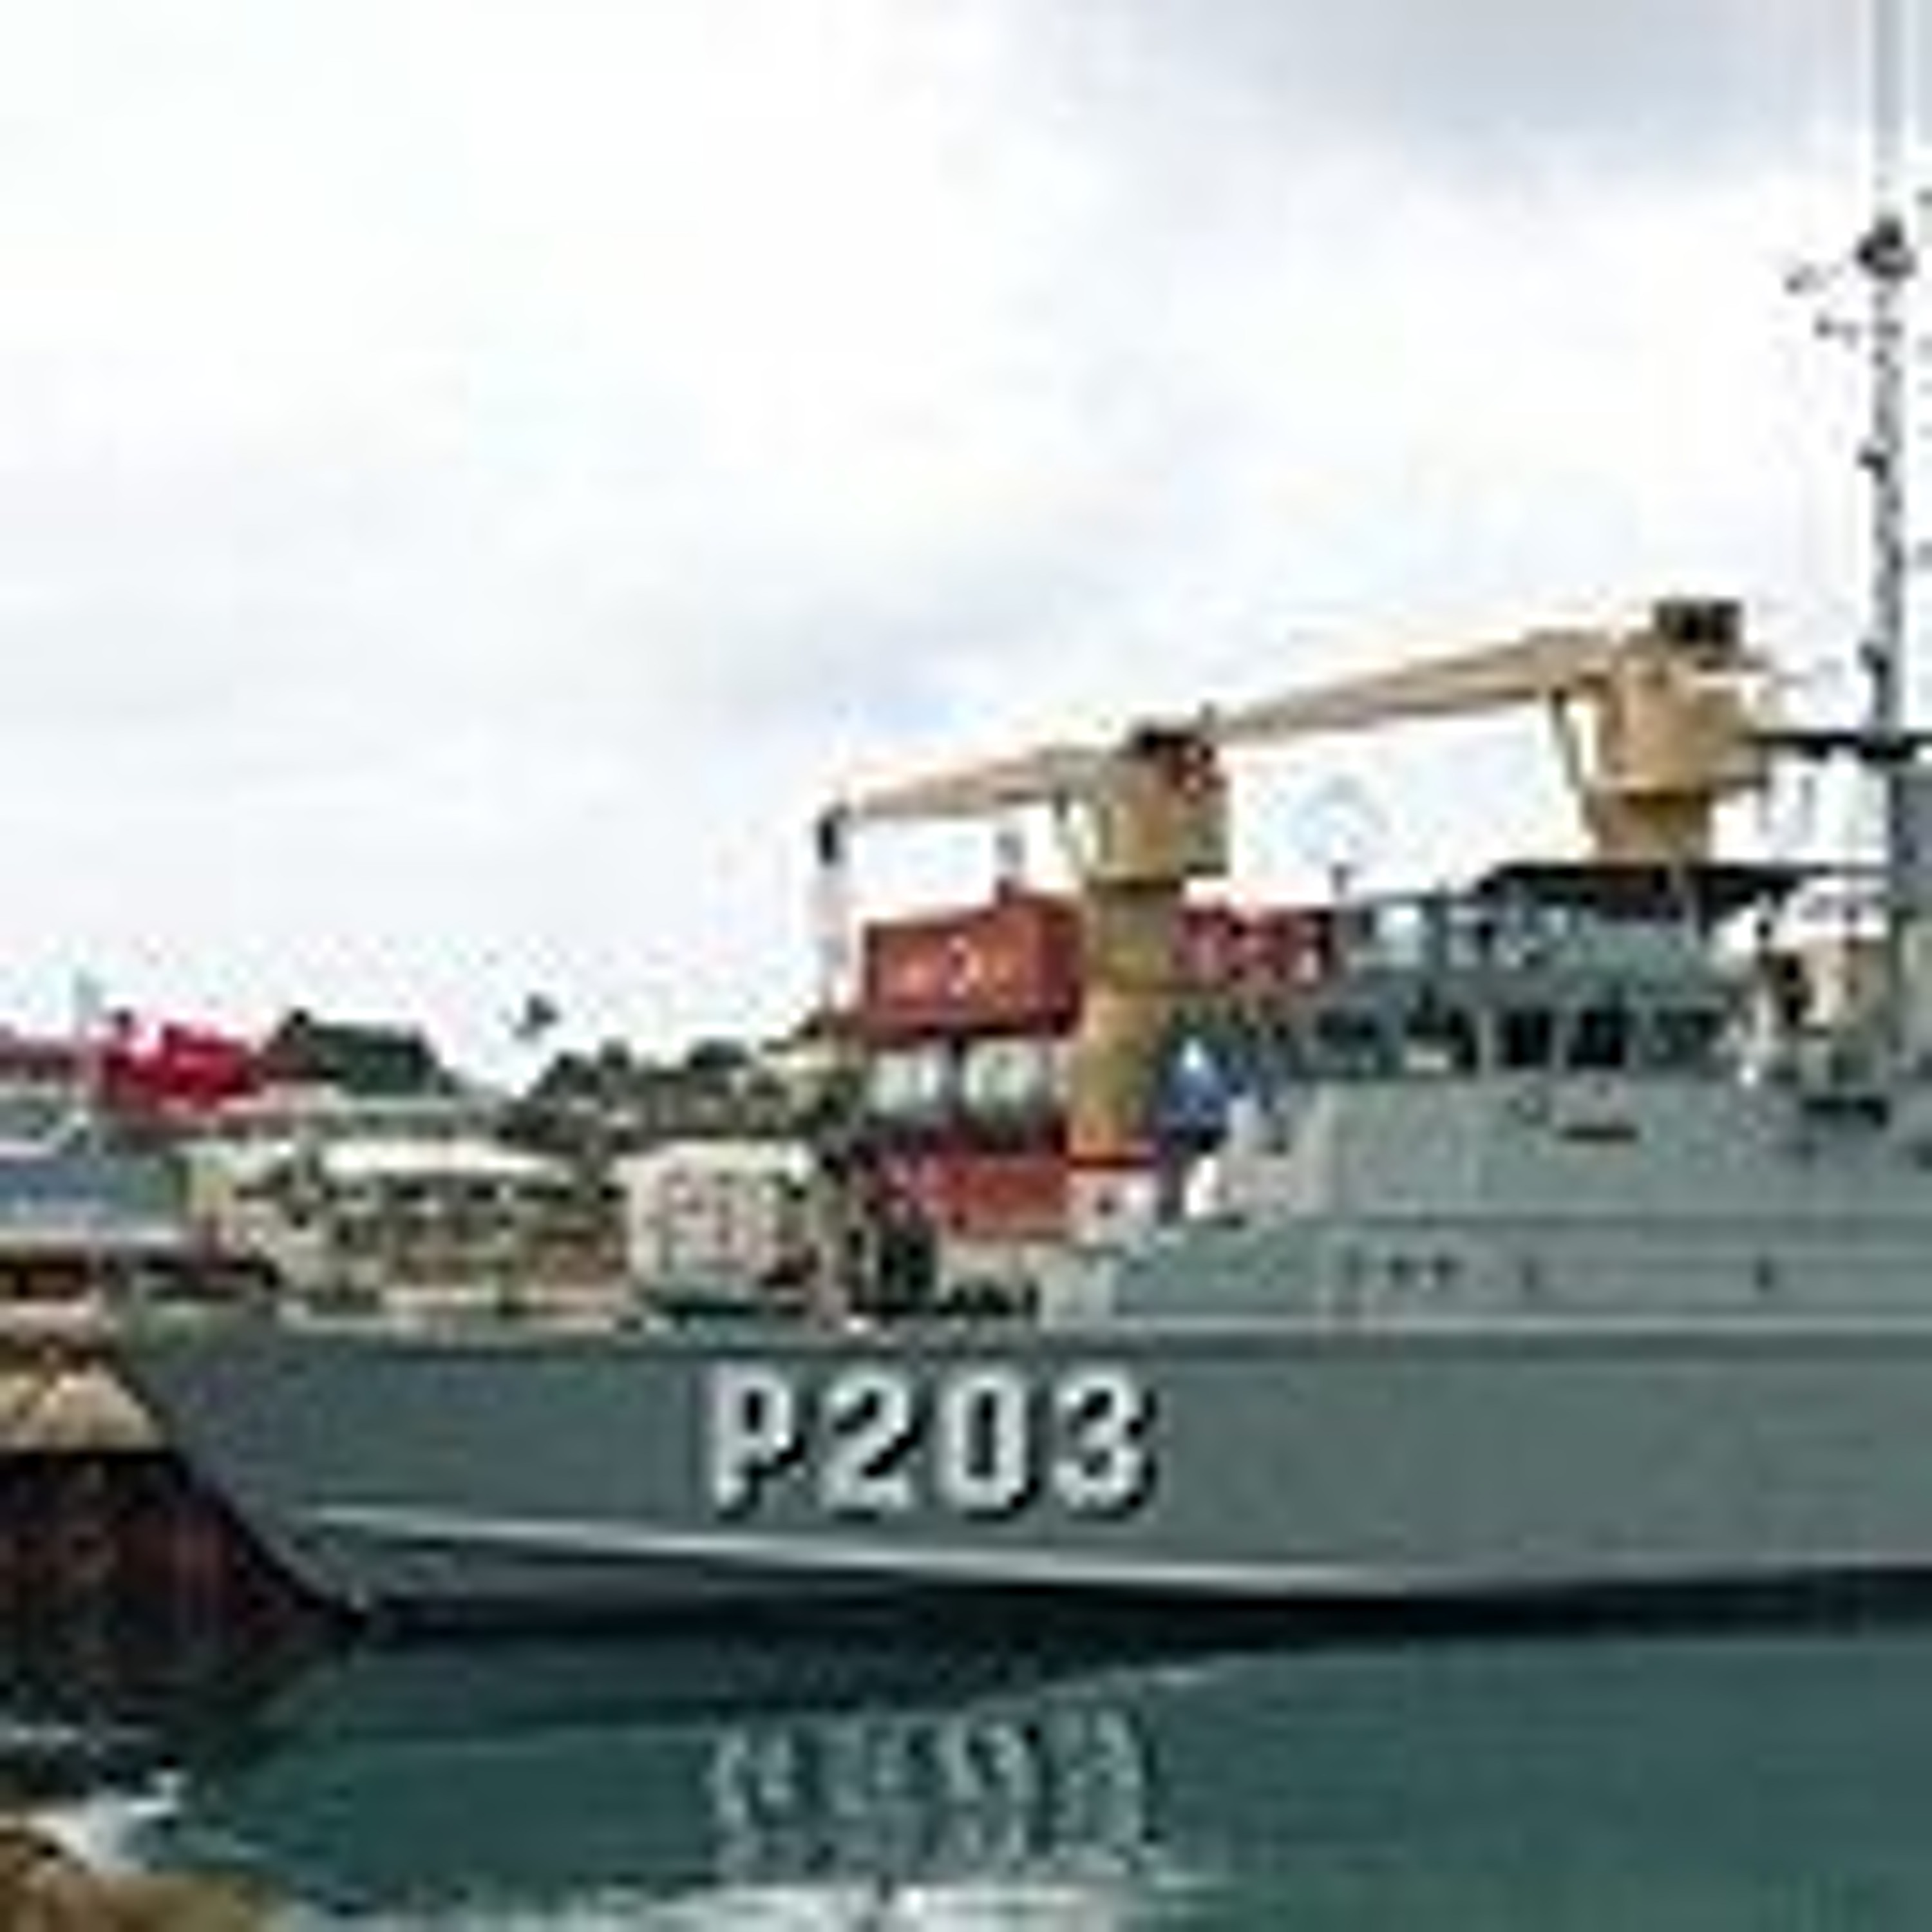 S7E11 - Pacific Forum Patrol Boat Part 1: The Concept